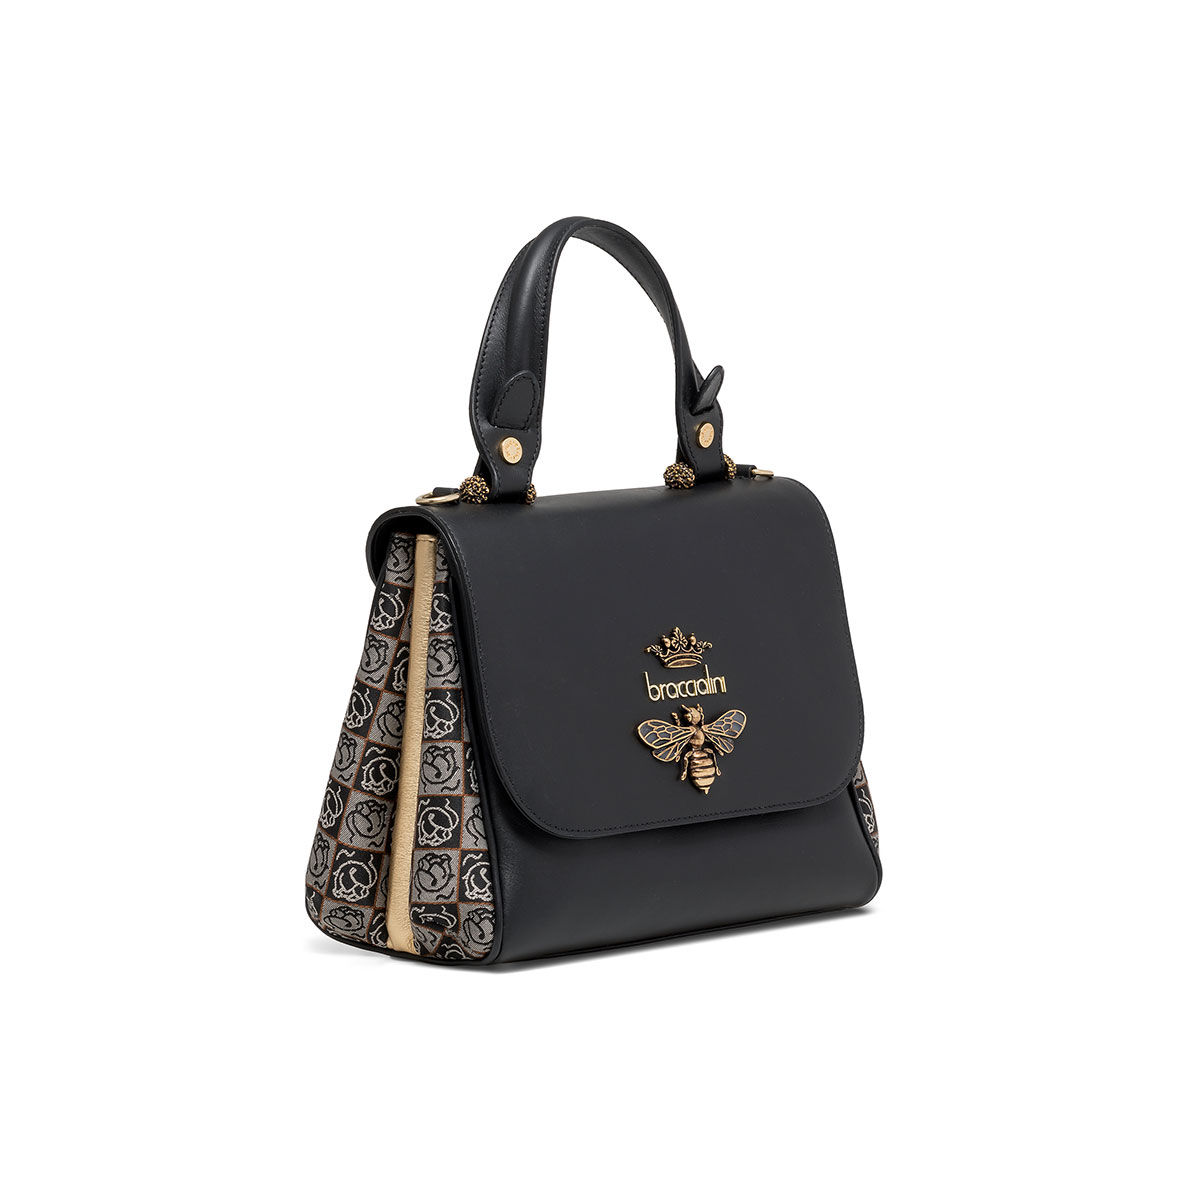 Iris - Made in Italy Genuine Leather Handbag - Handbags - FrasiBags